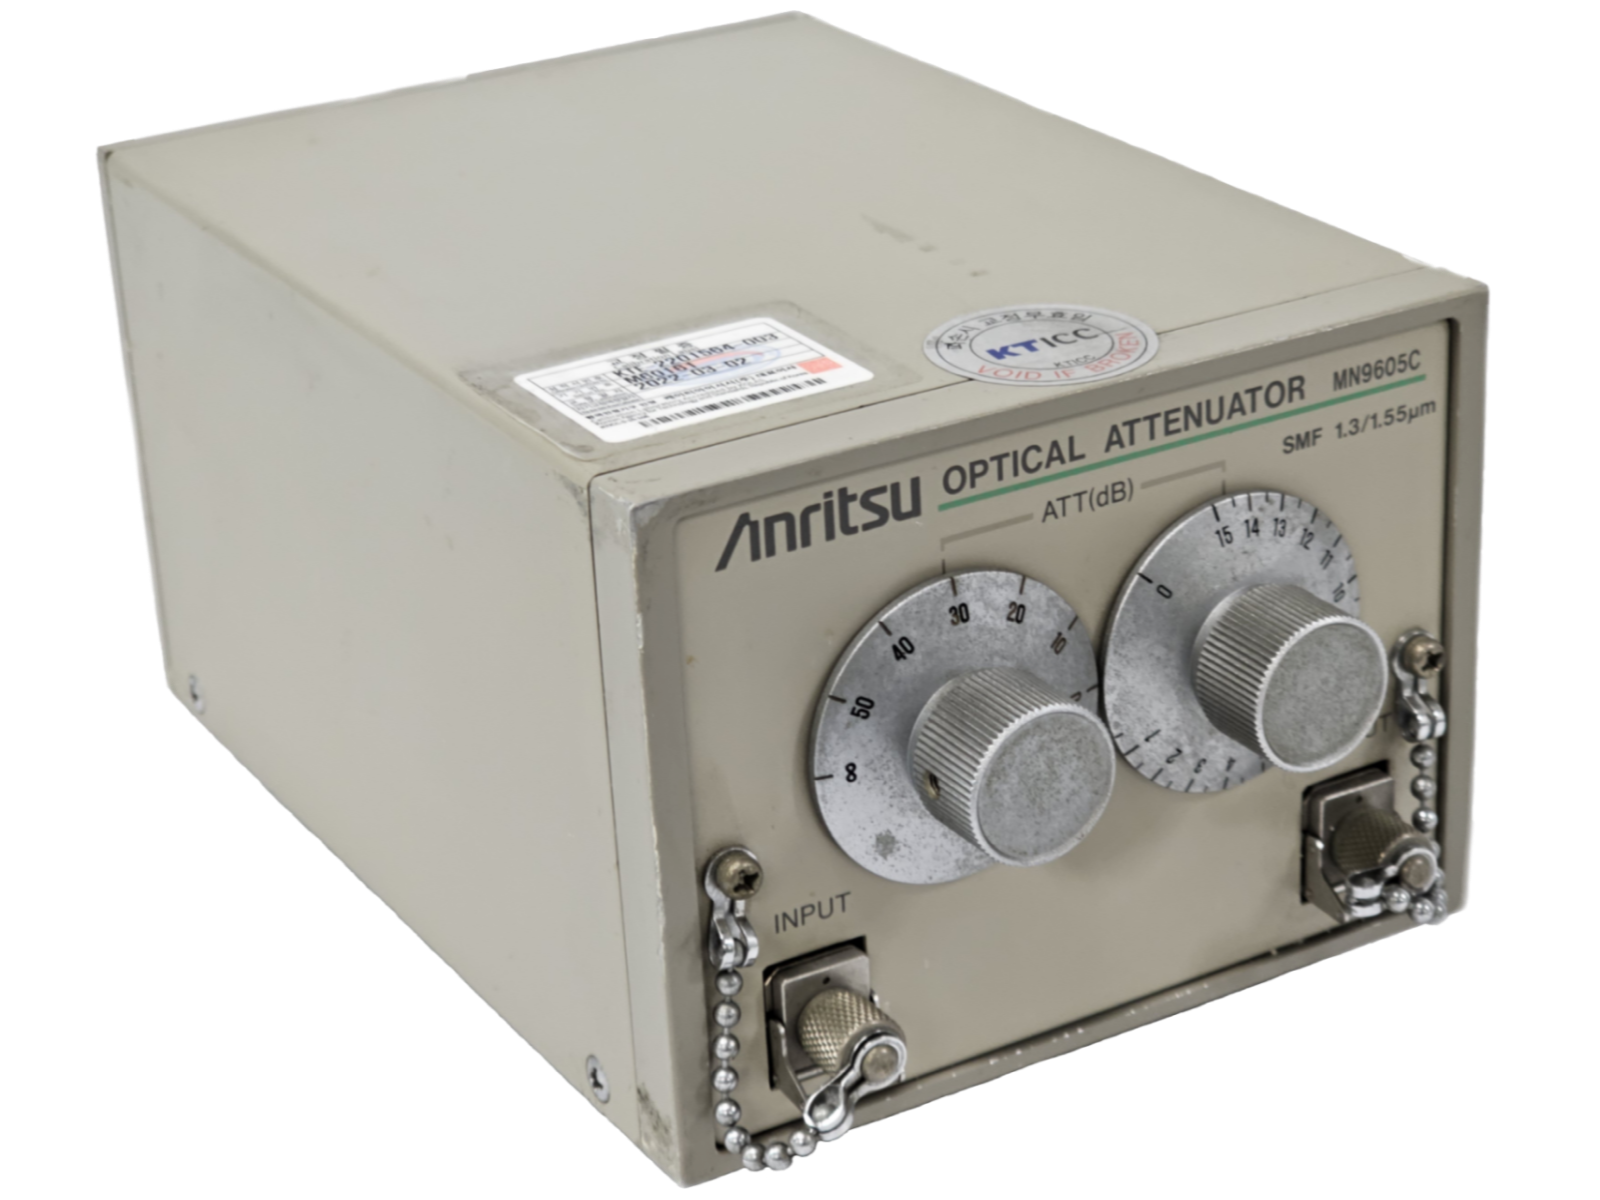 Anritsu/Optical Attenuator/MN9605C